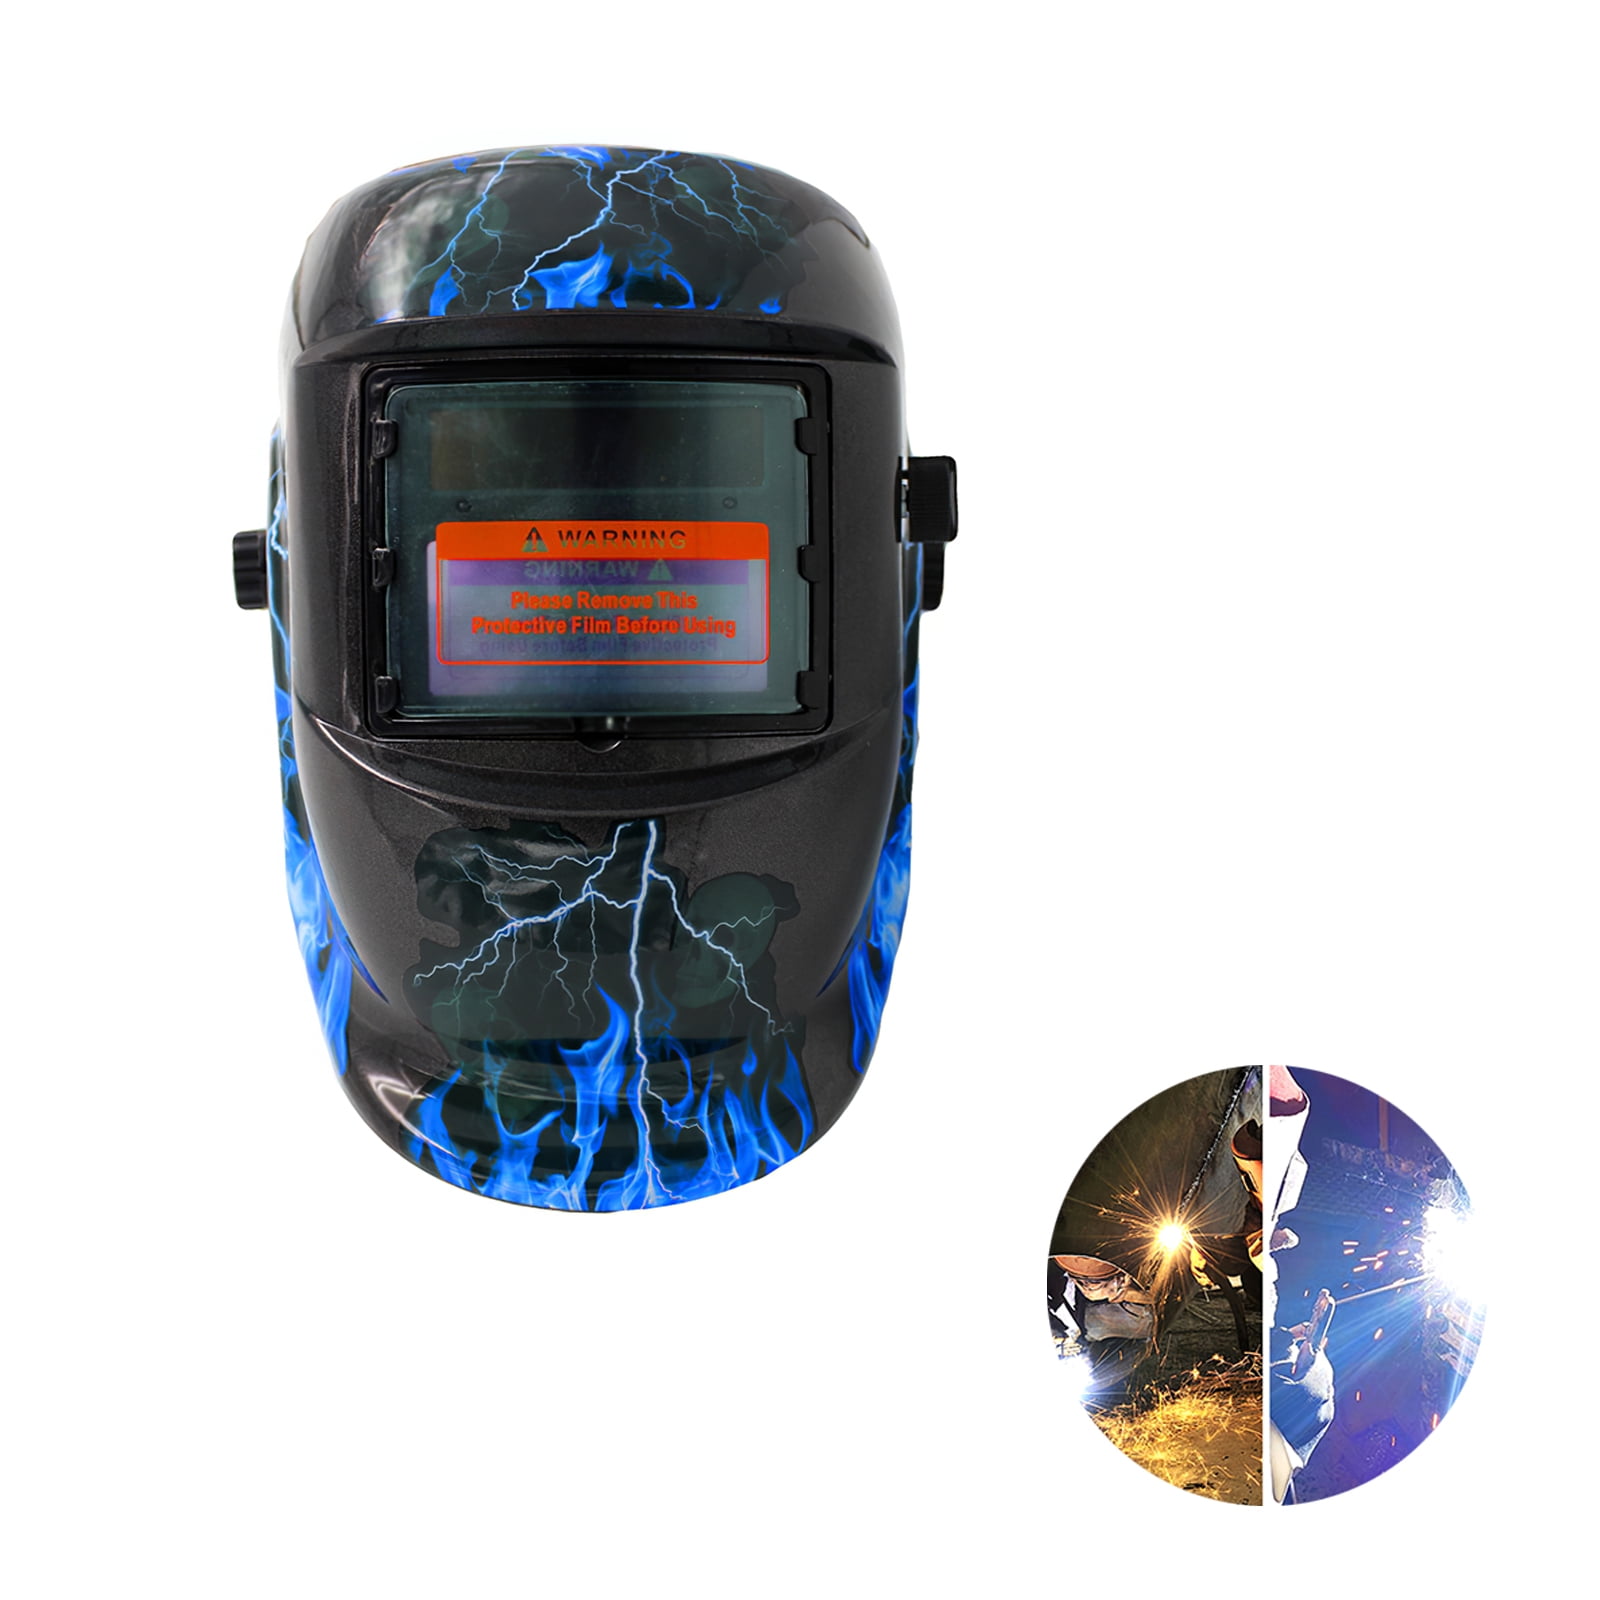 Solar Powered Auto Darkening Welding Helmet with Adjustable Shade Range #9 #13 for TIG MIG ARC Welding Mask 